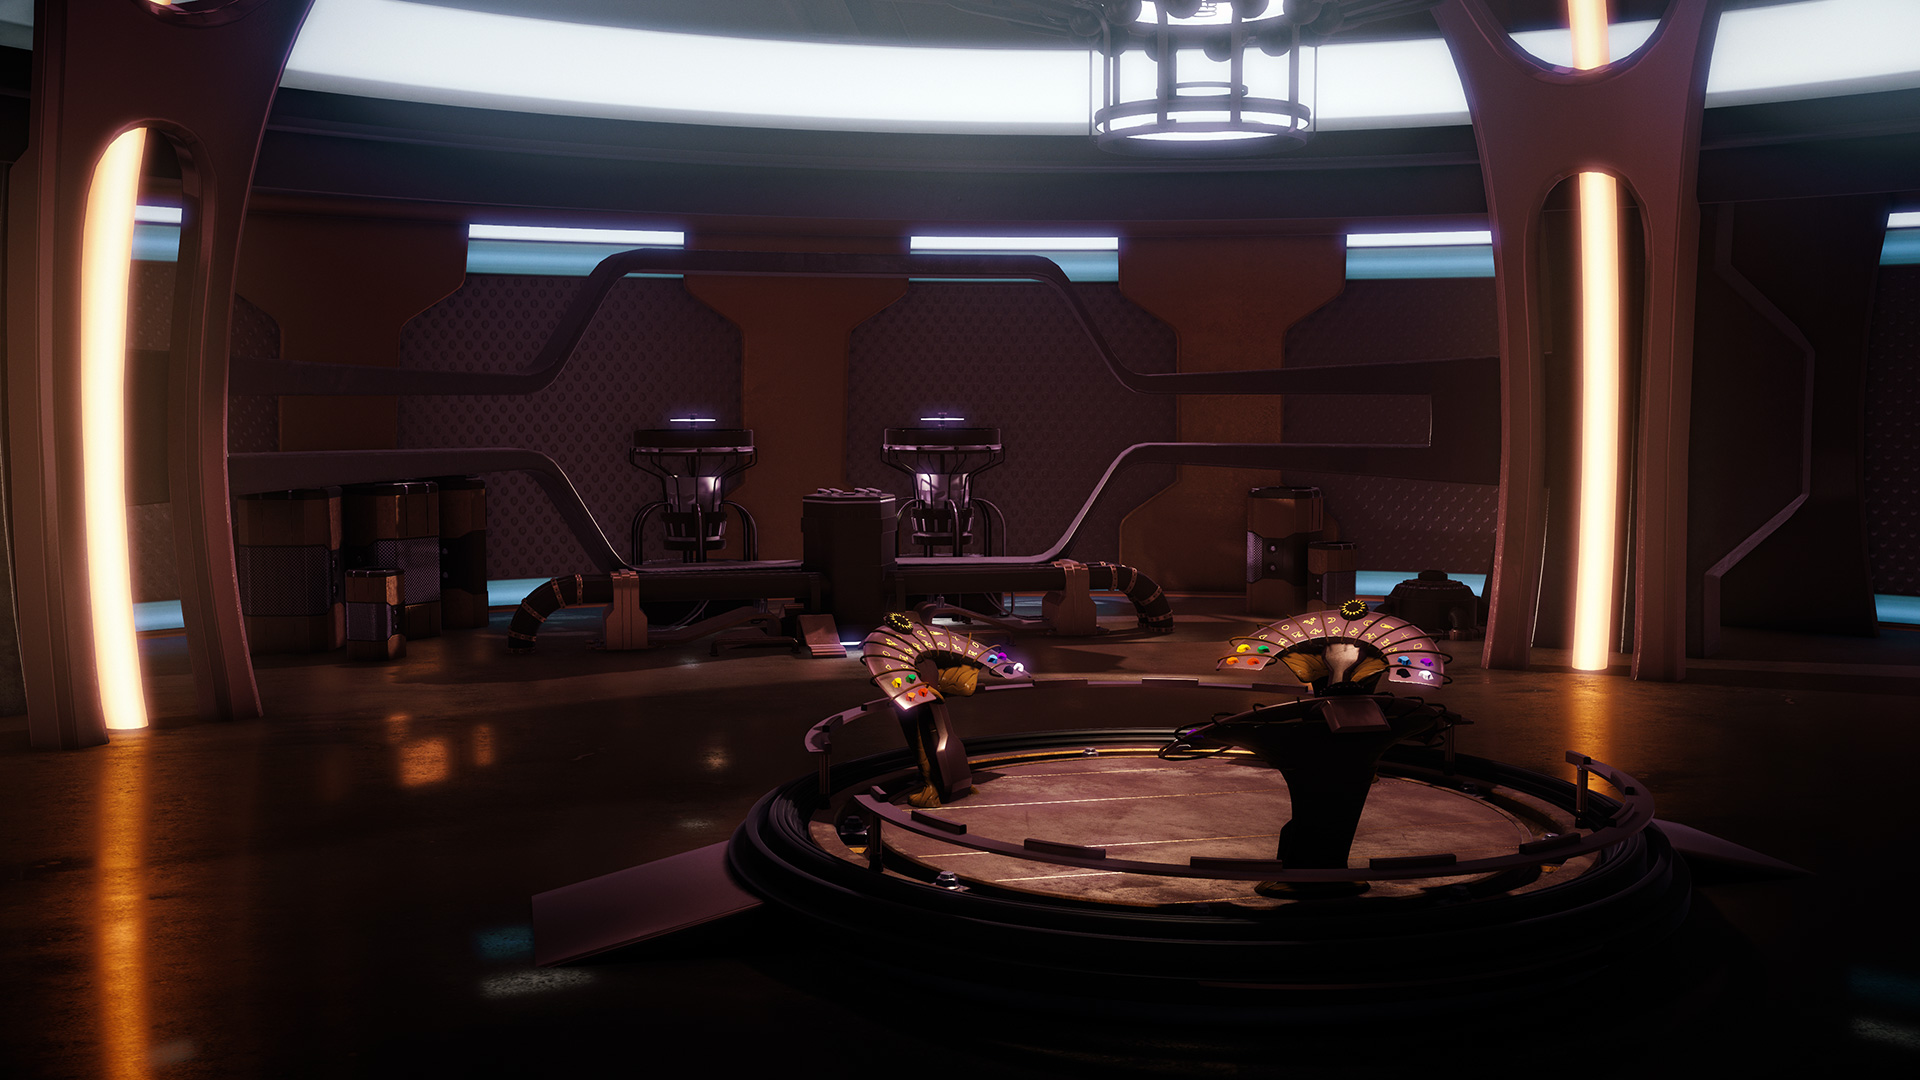 3D rendering of the new spaceship interior, work in progress.